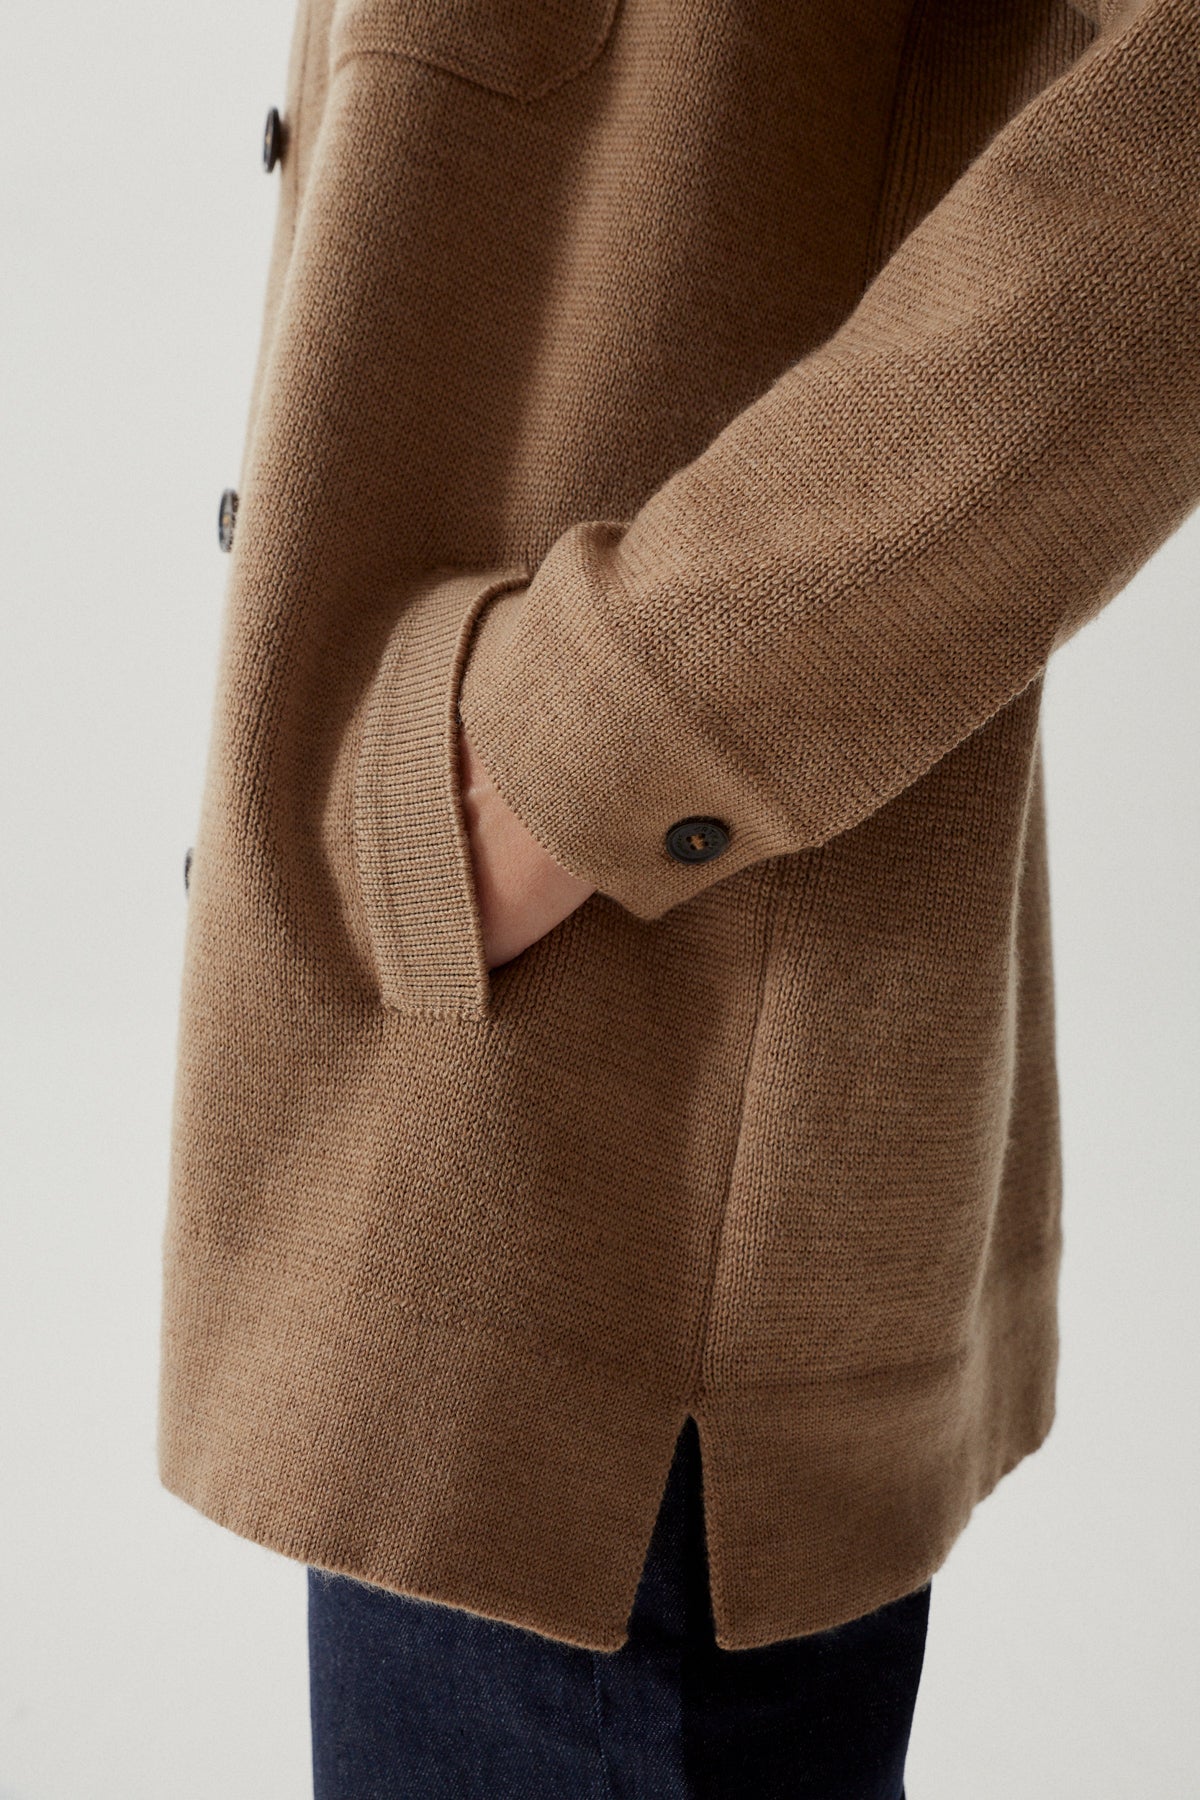 Camel | The Merino Wool Overshirt Jacket – Imperfect Version